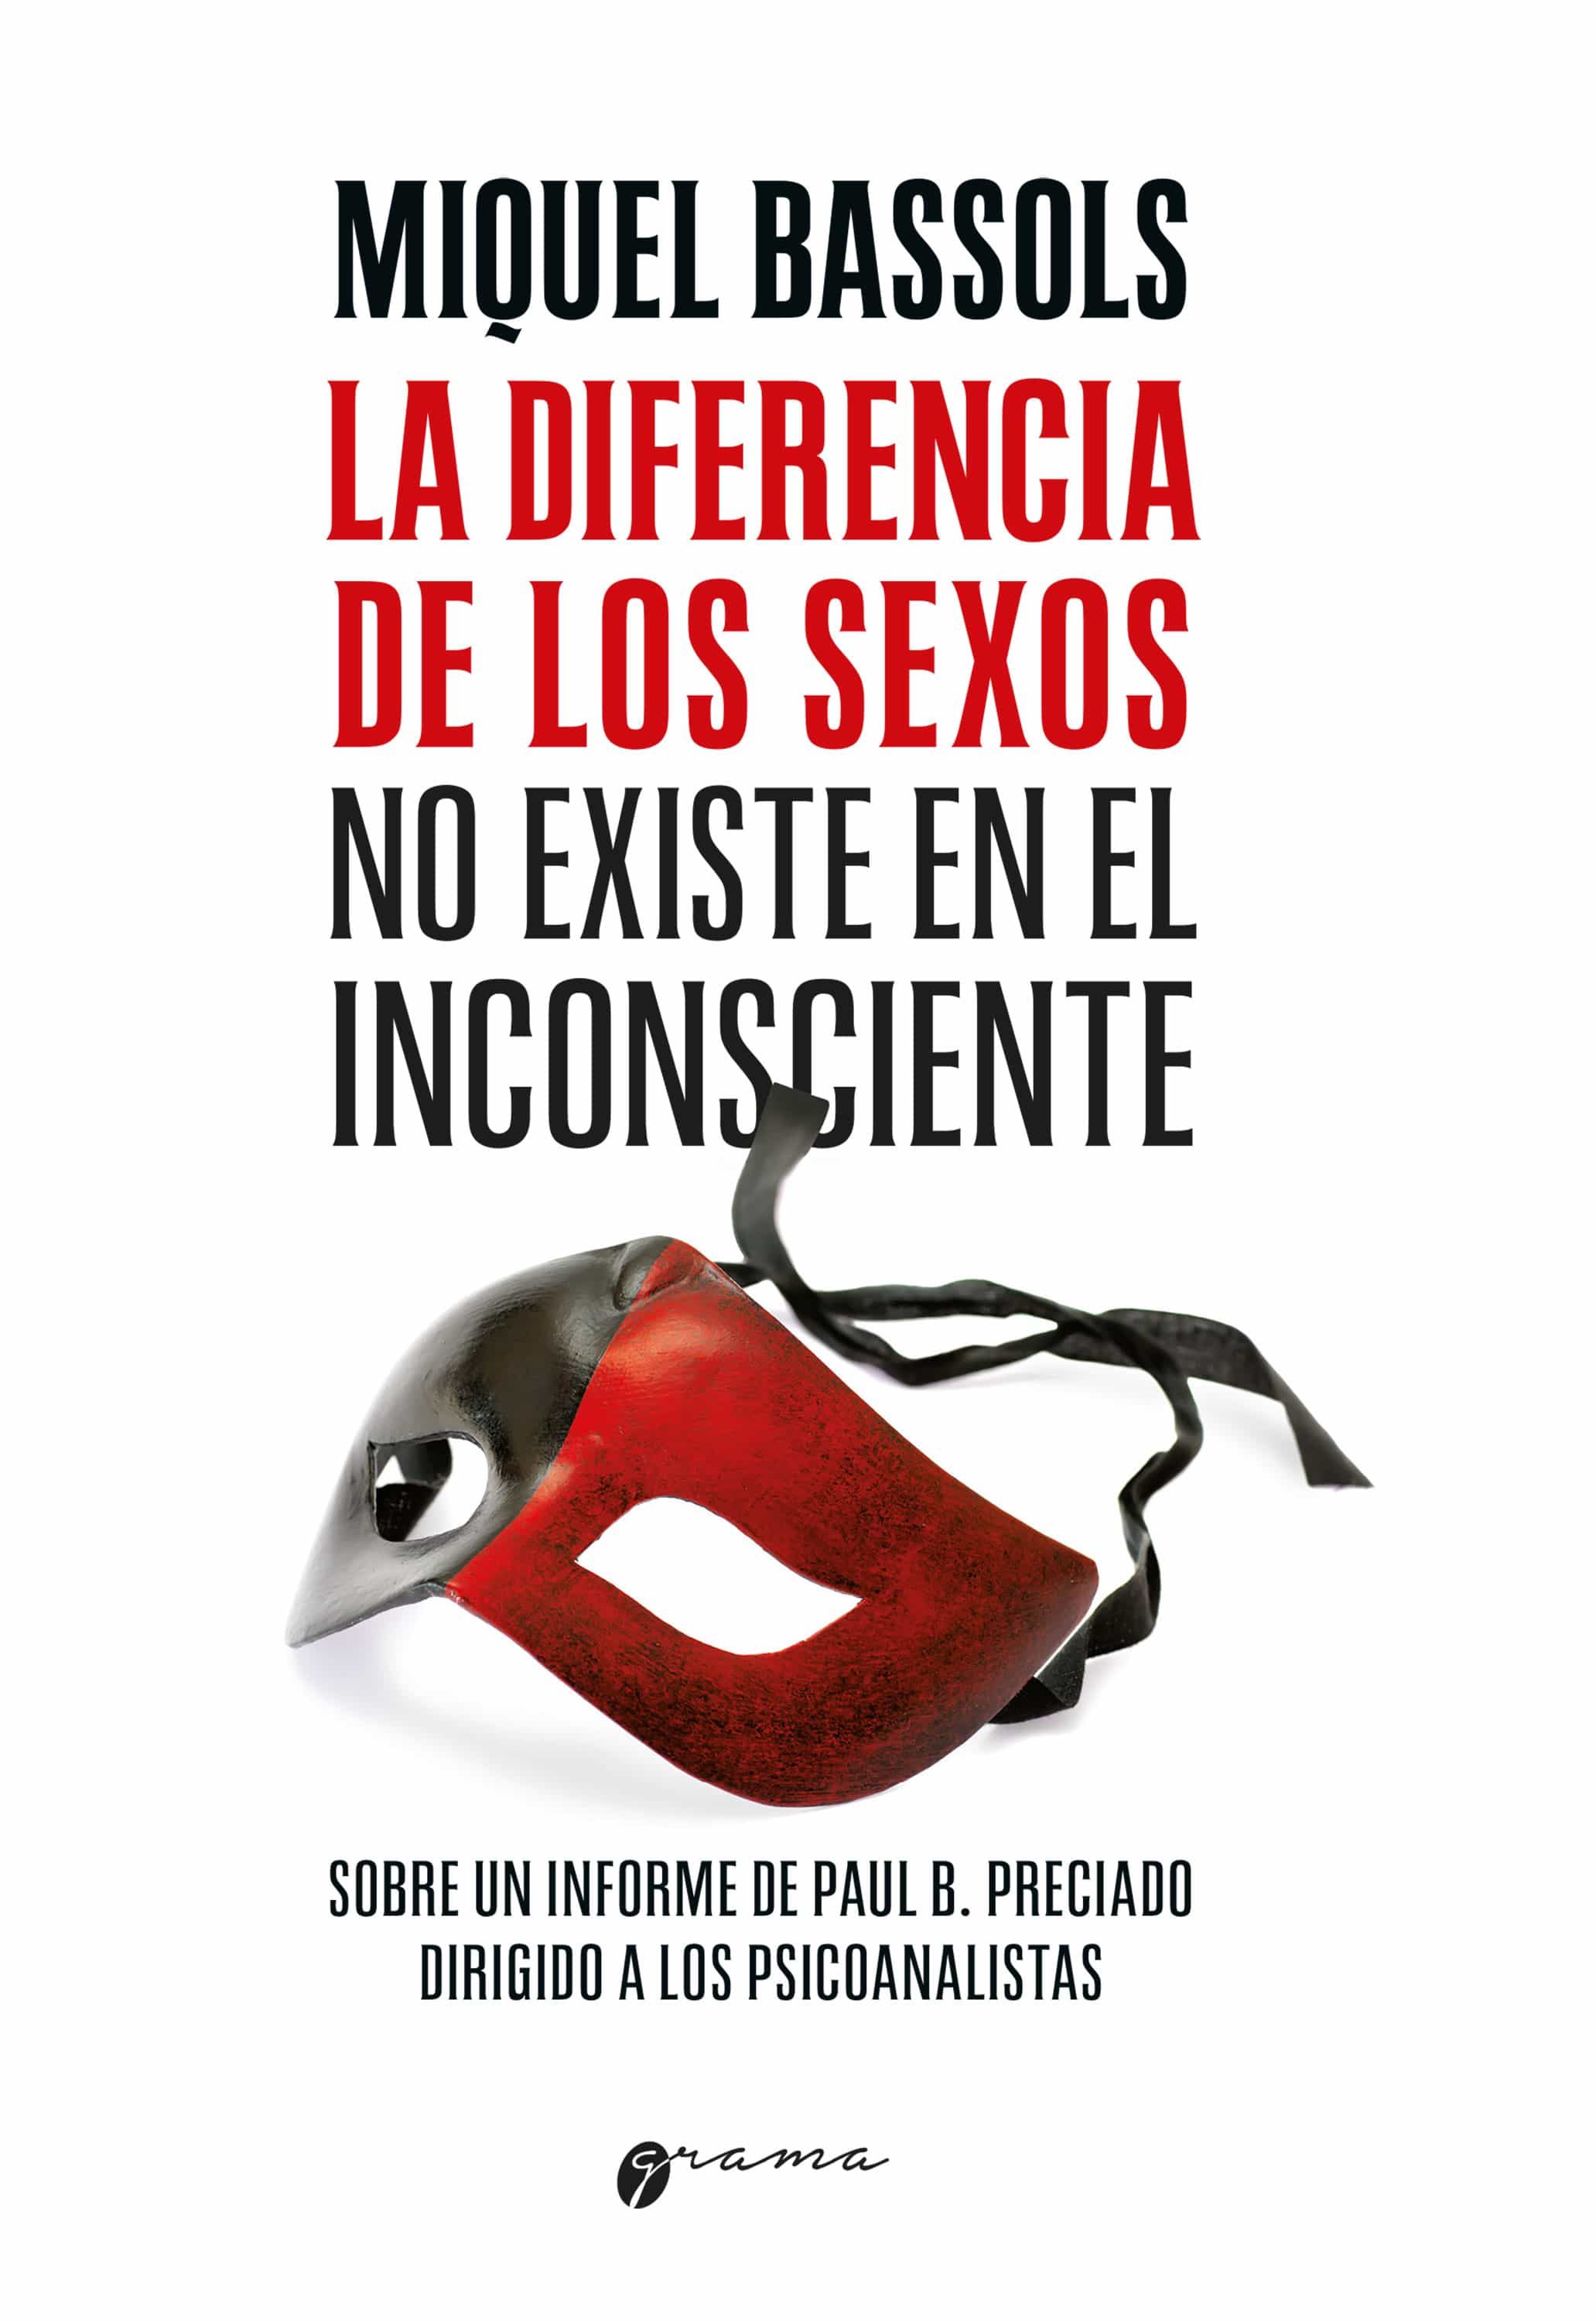 Presentació del llibre: La diferencia de los sexos no existe en el inconsciente, de Miquel Bassols.